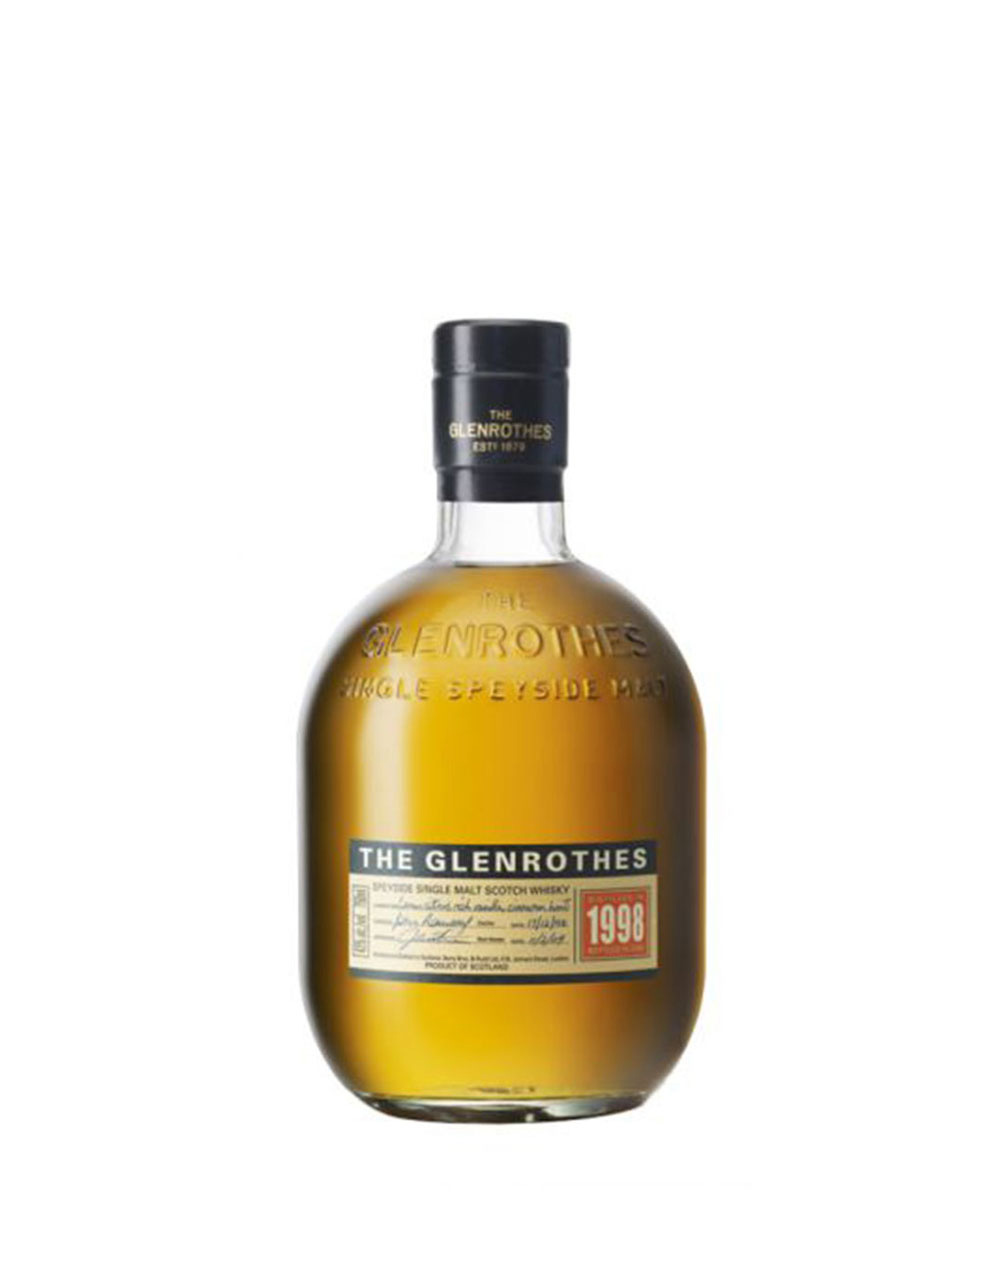 The Glenrothes 1998 Vintage Scotch Whisky